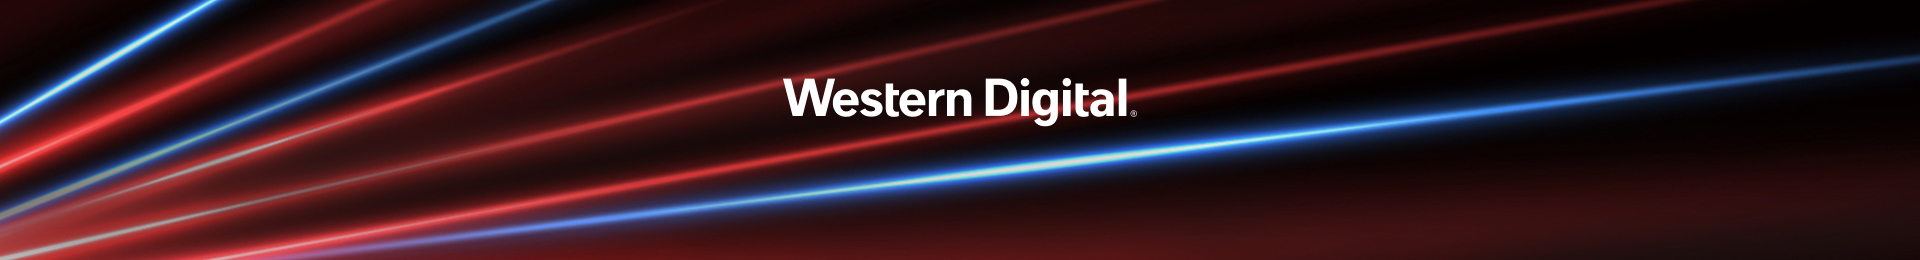 Western Digital в Softline